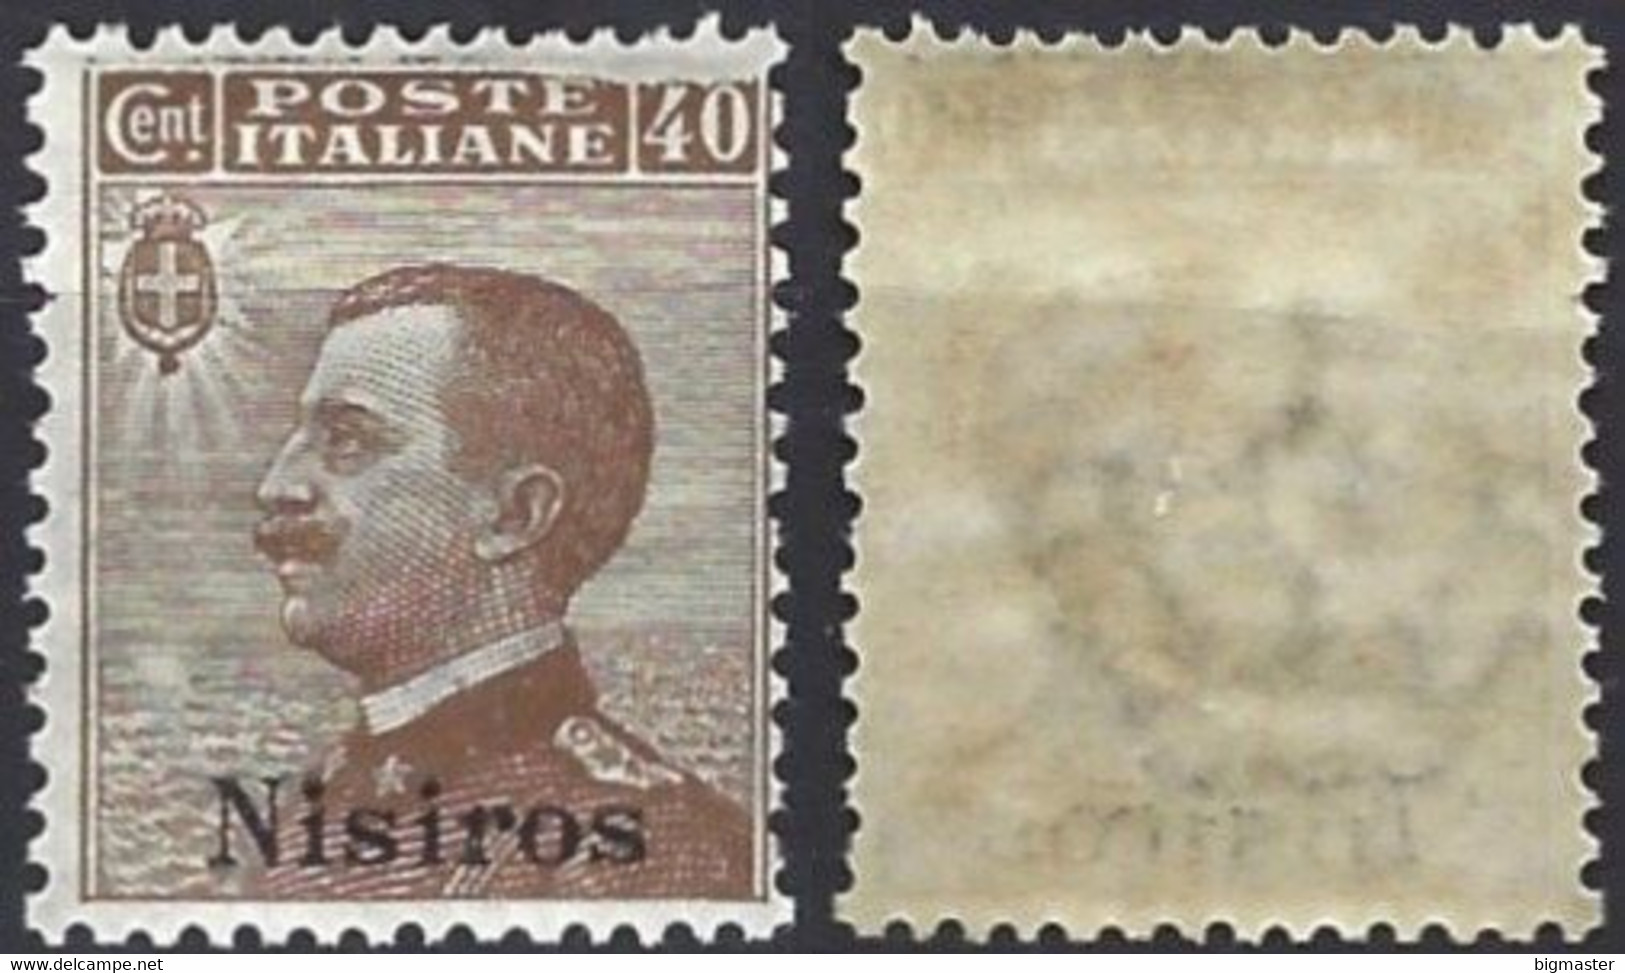 1912 Regno D'Italia IG 1912 IT-EG NI6 Franc Italia Soprast Nisiros New - Aegean (Nisiro)